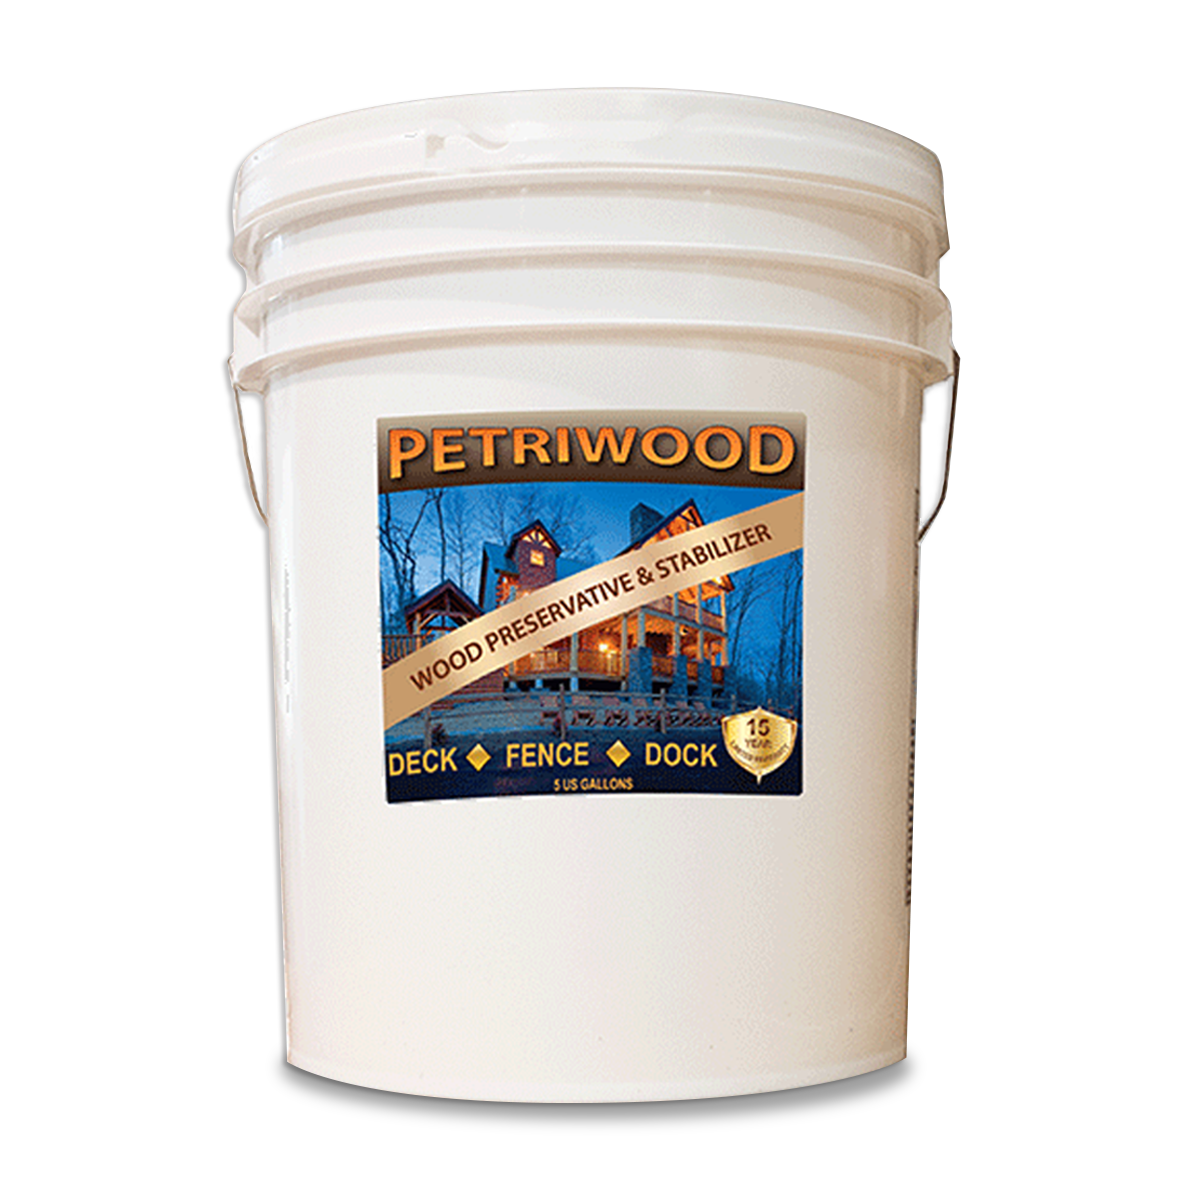 Petriwood Stabilizer Treatment | Prevent Moisture & Decay